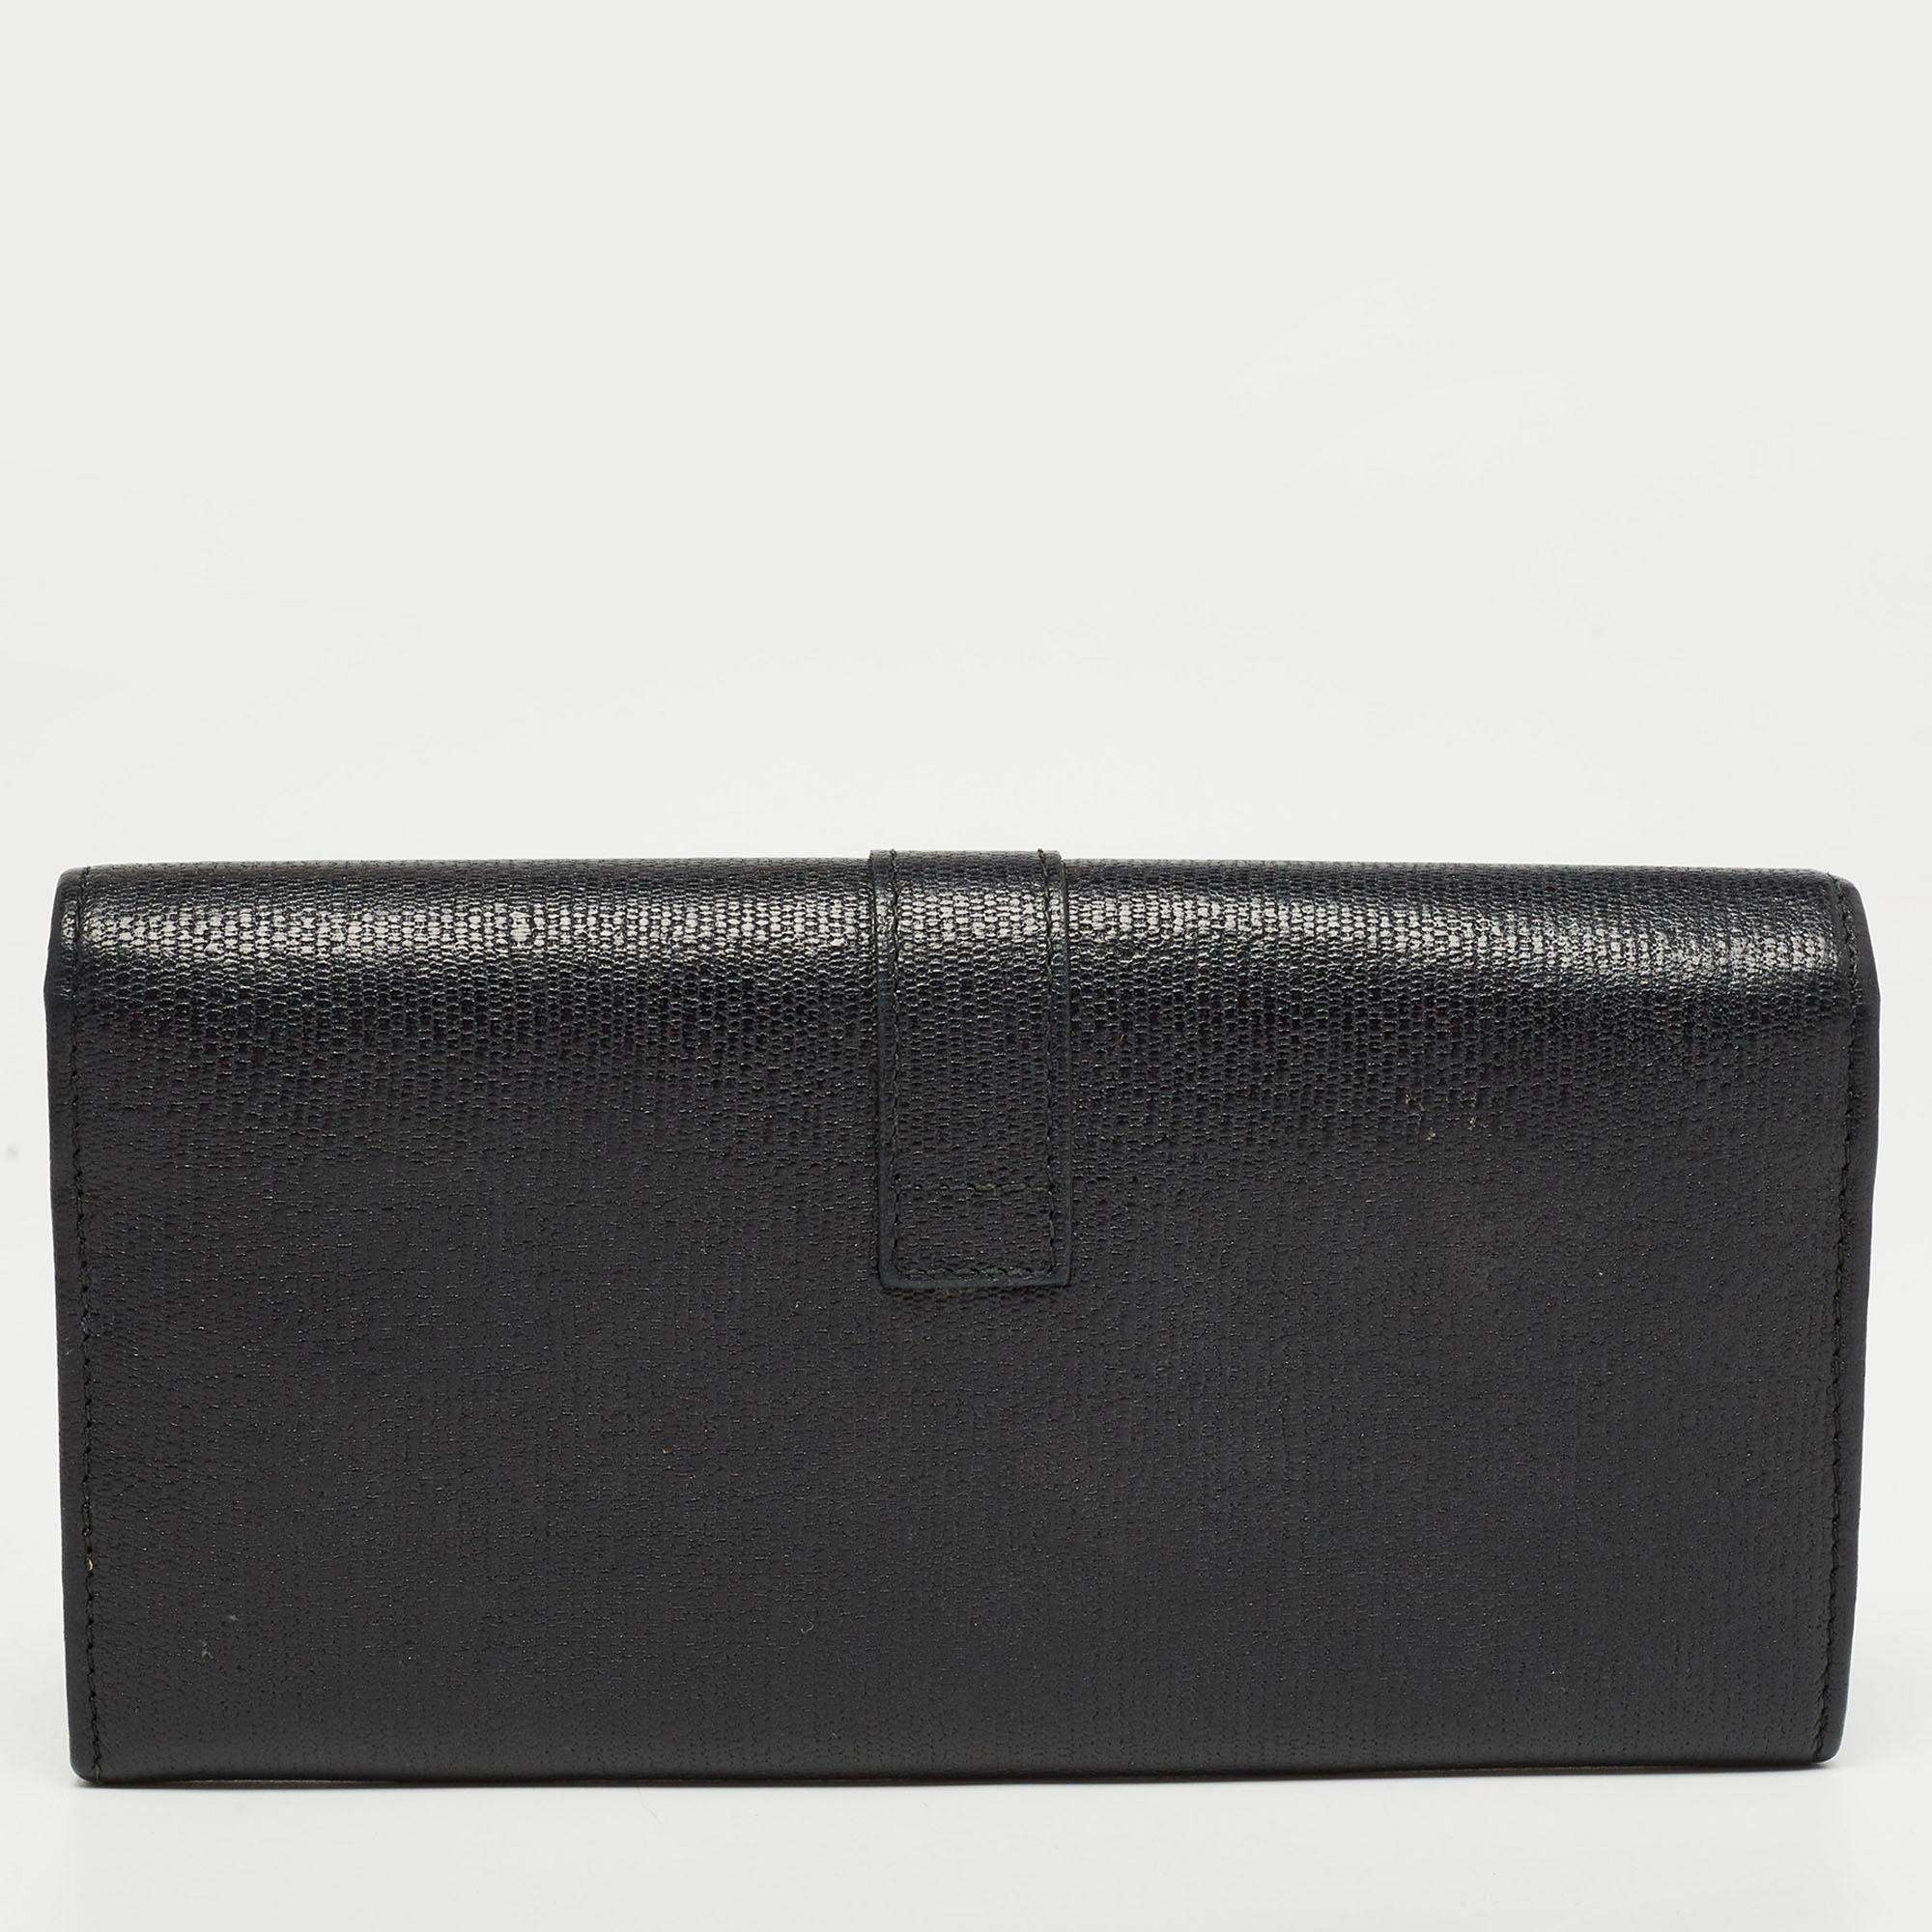 Yves Saint Laurent Black Leather Y Line Flap Continental Wallet For Sale 1